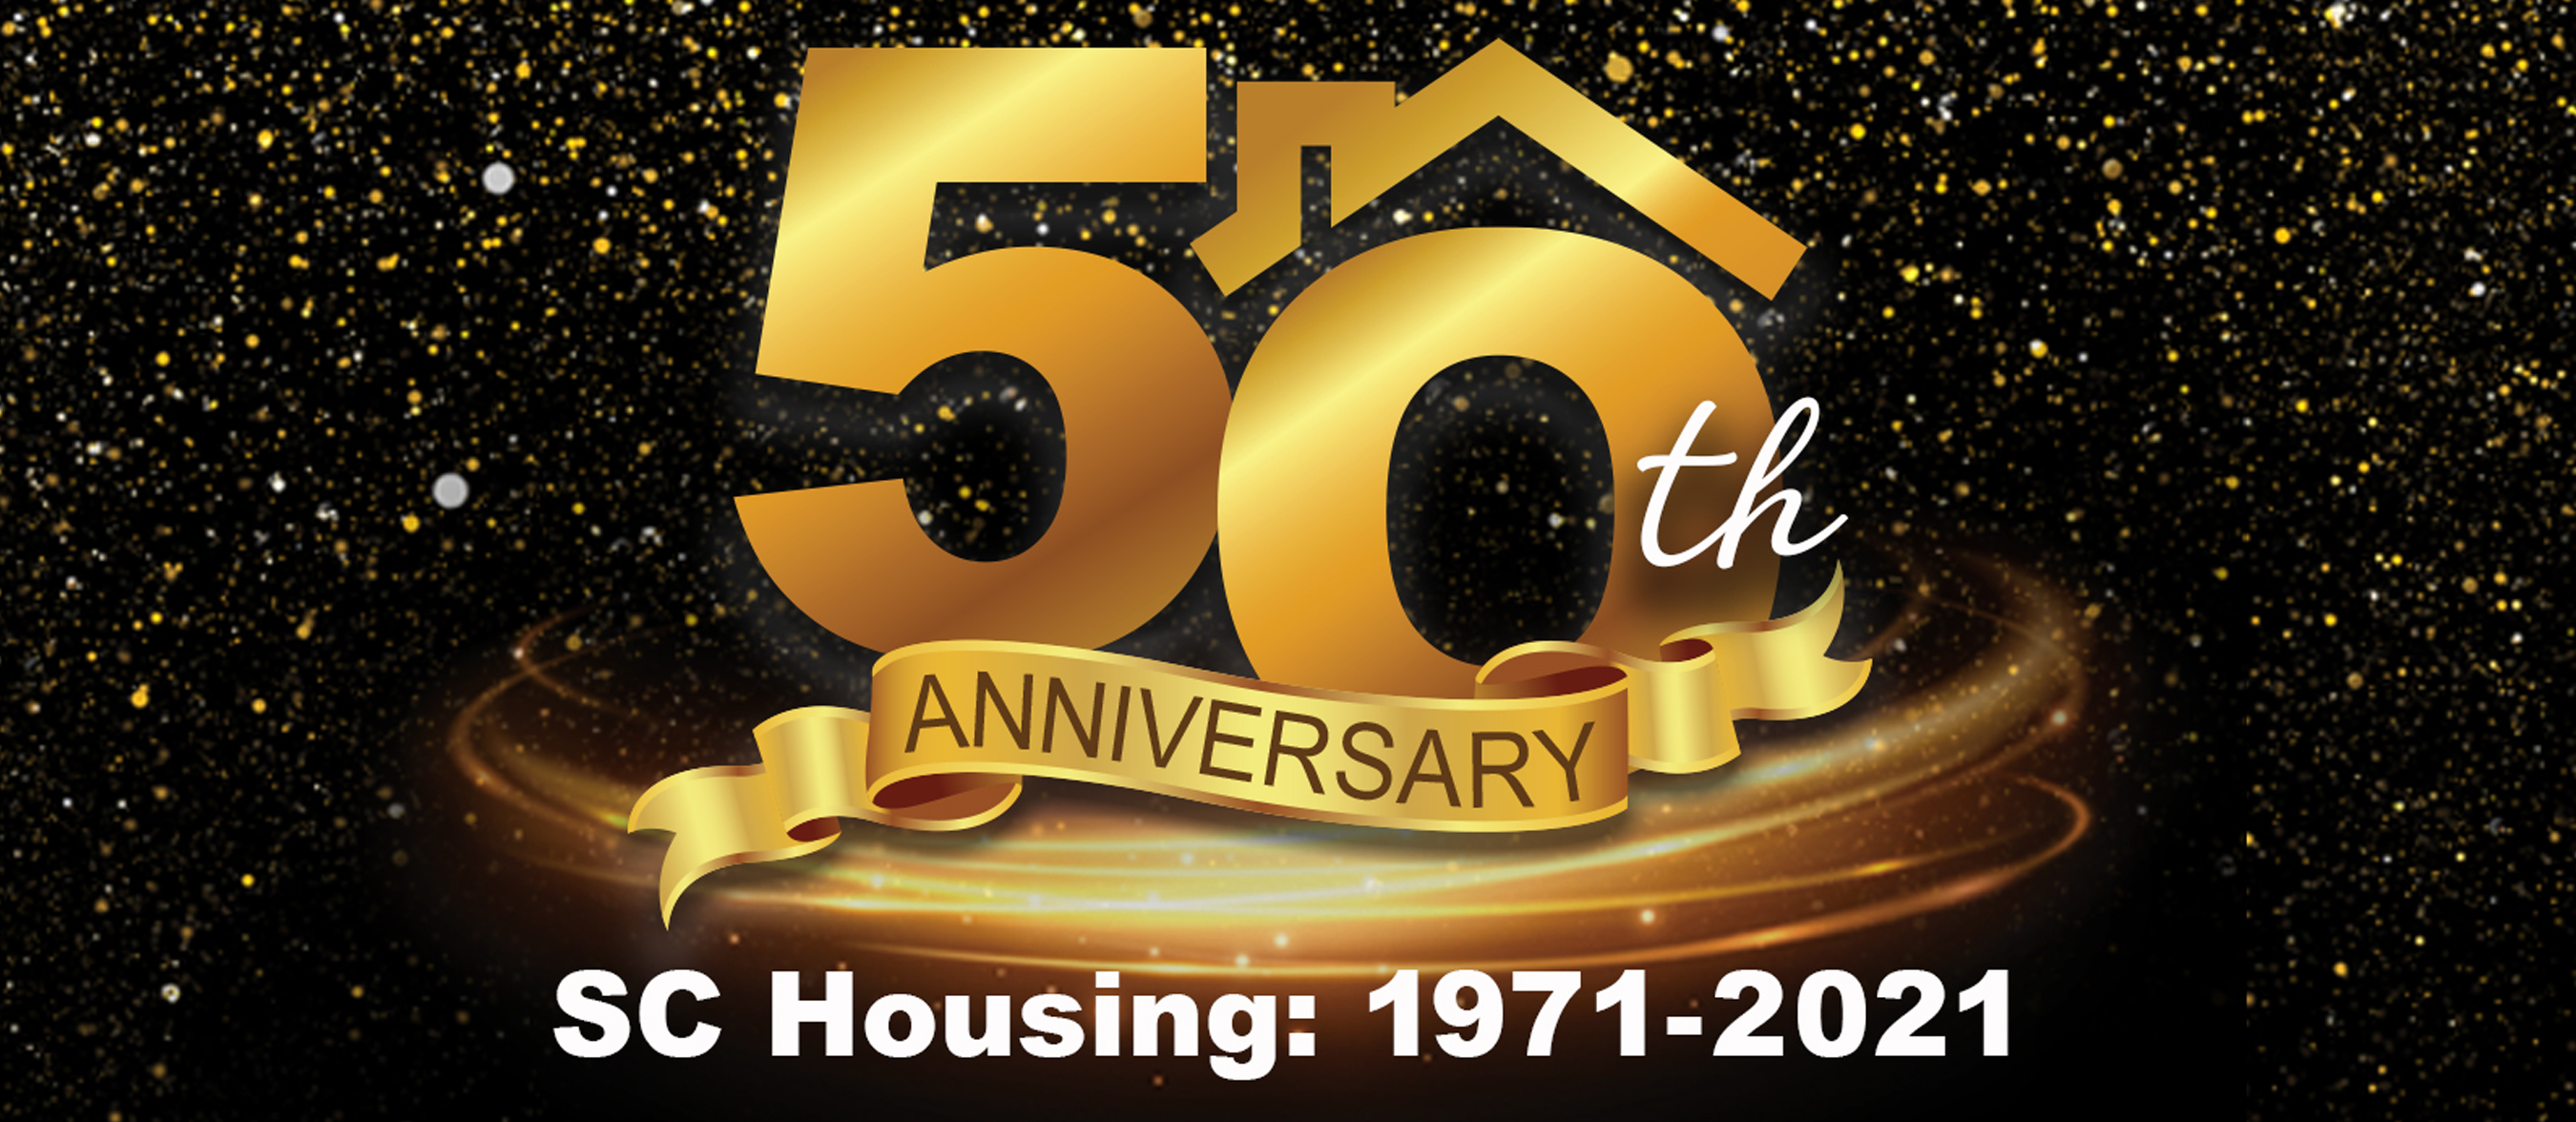 SC Housing using social media to celebrate 50th anniversary